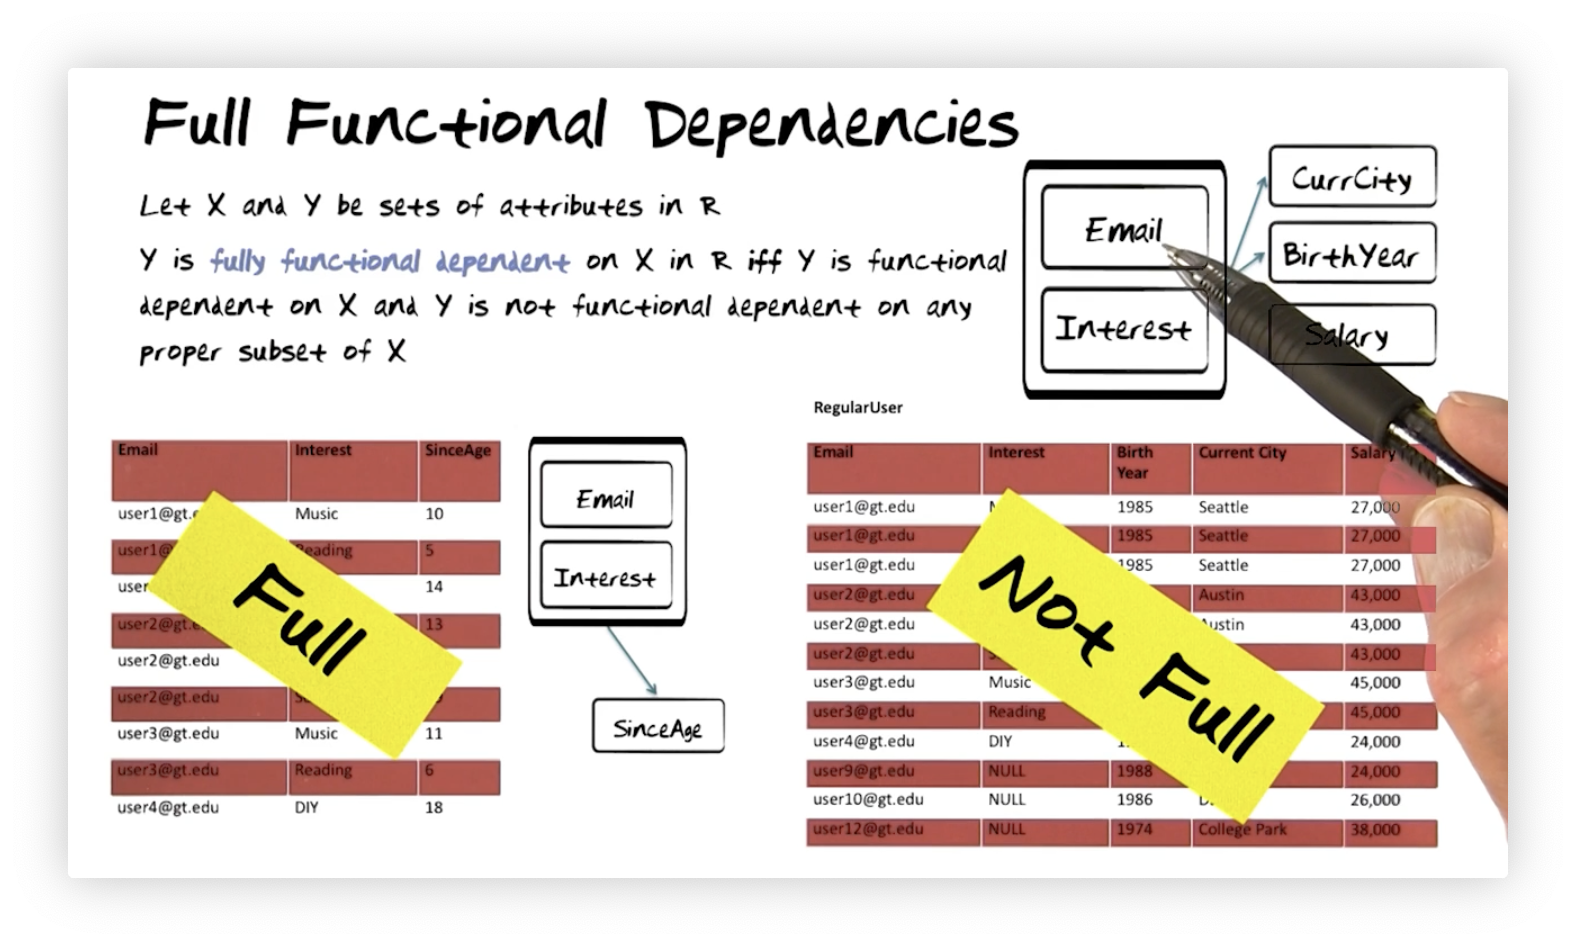 Full Functional
Dependencies